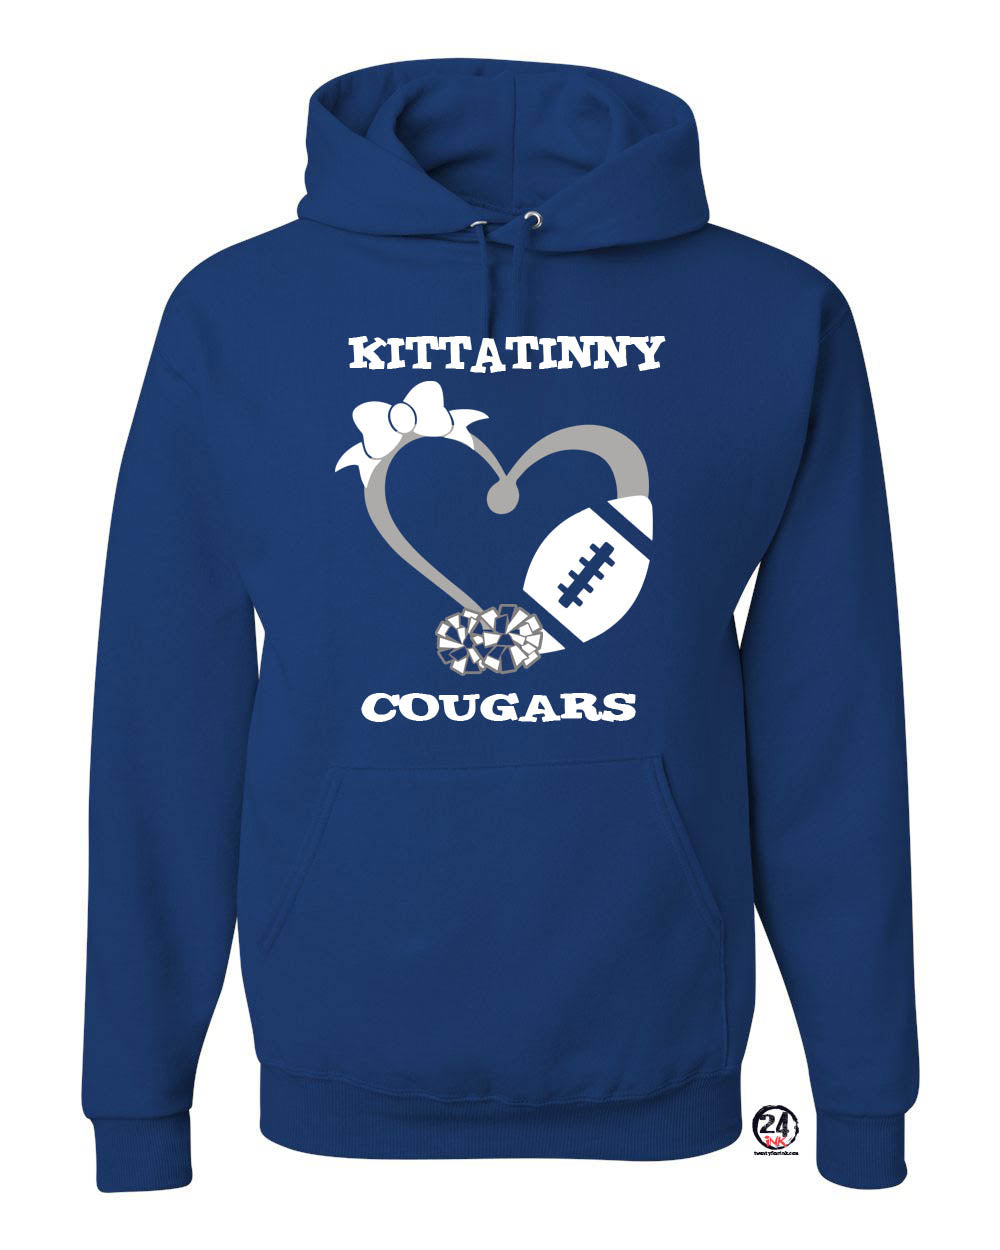 Kittatinny Cheer Design 3 Hooded Sweatshirt